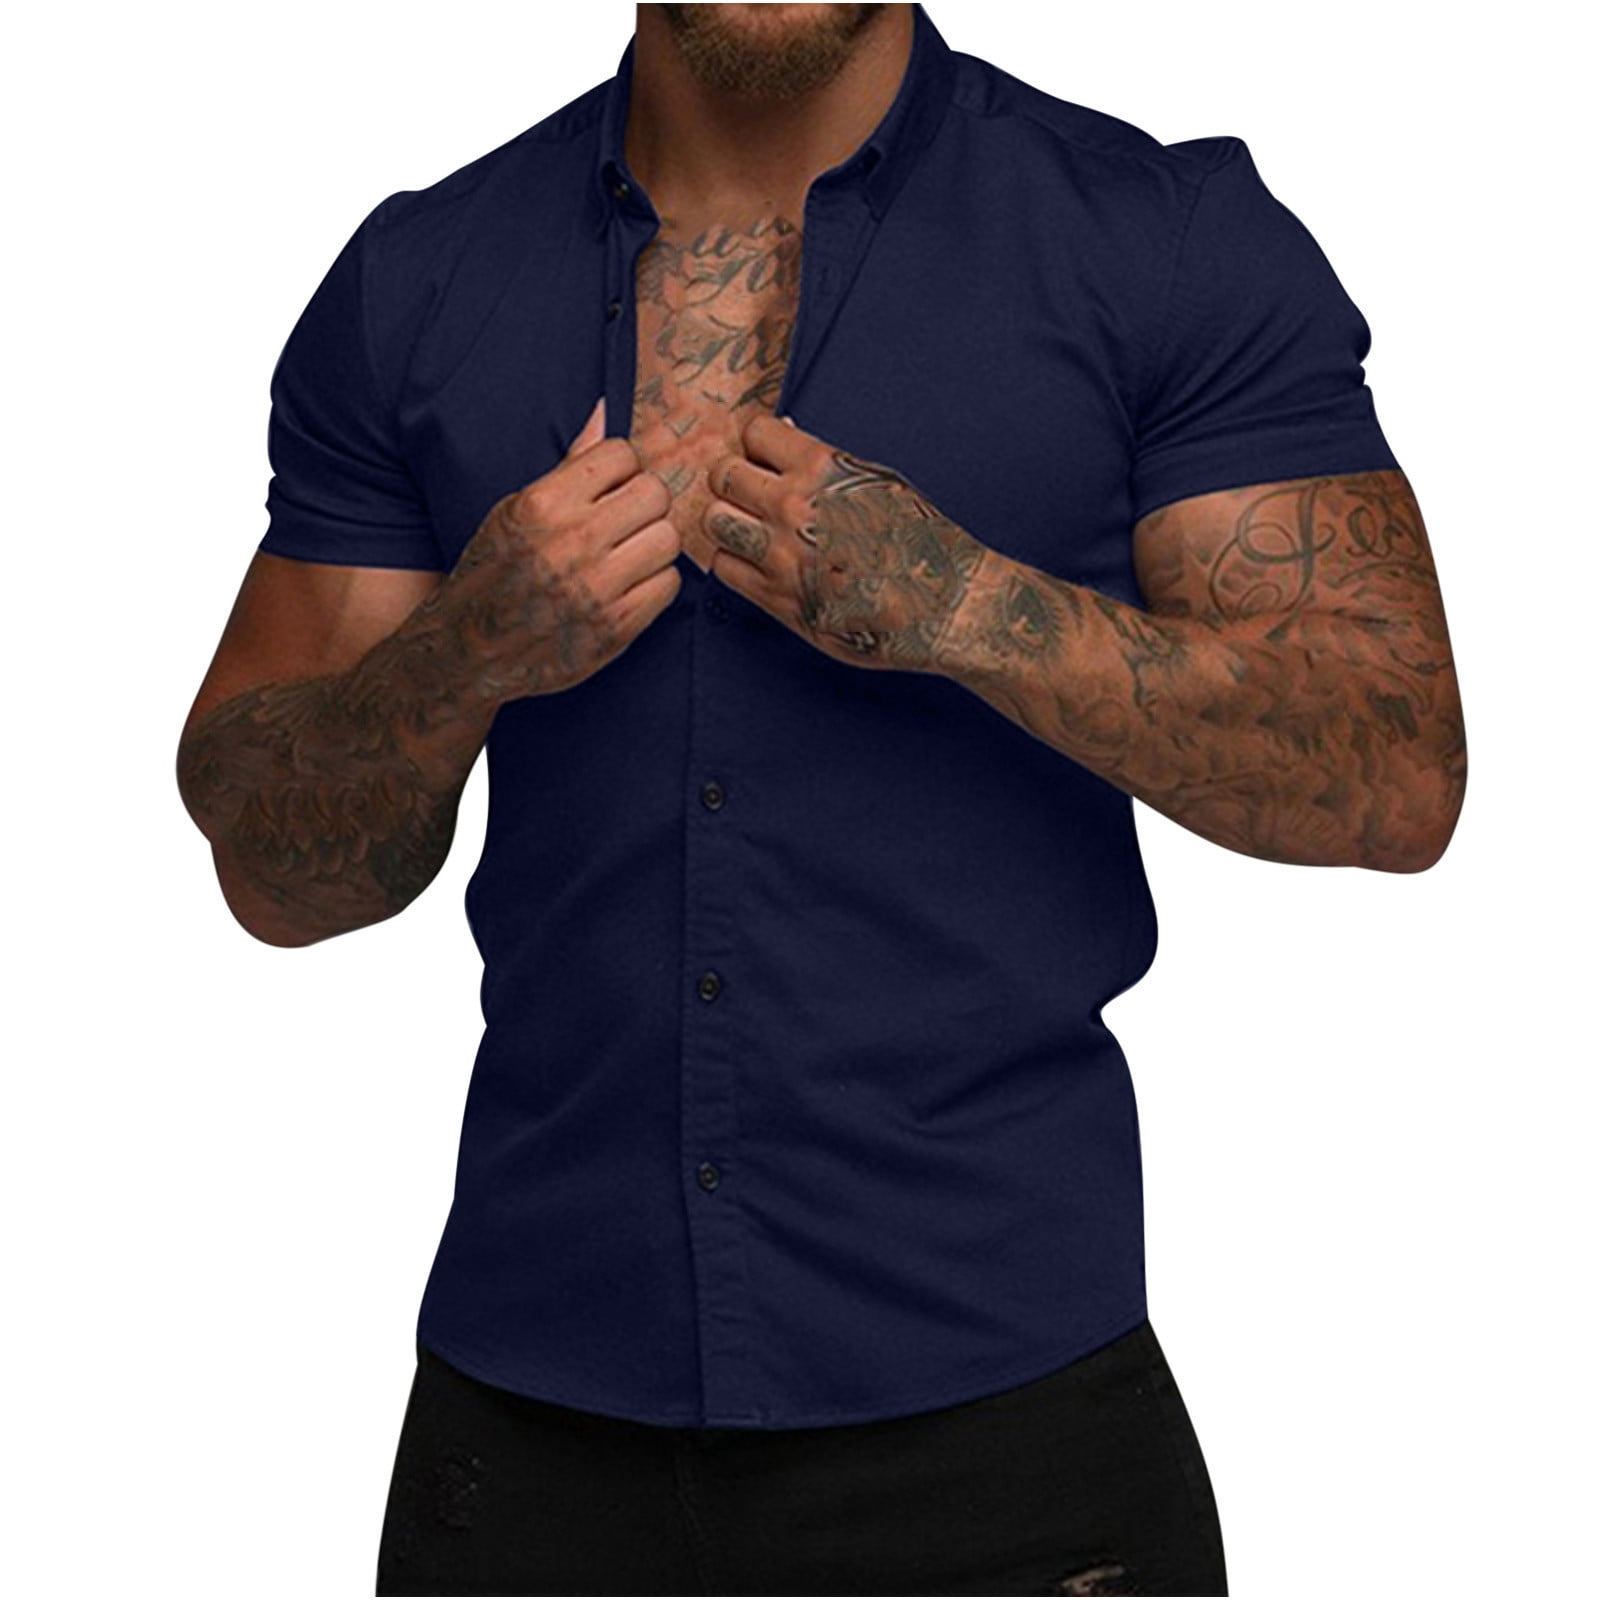 Hfyihgf Men's Muscle Dress Shirts Slim Fit Stretch Formal Shirt Business Short  Sleeve Casual Button Down Shirt(Black,XL) 